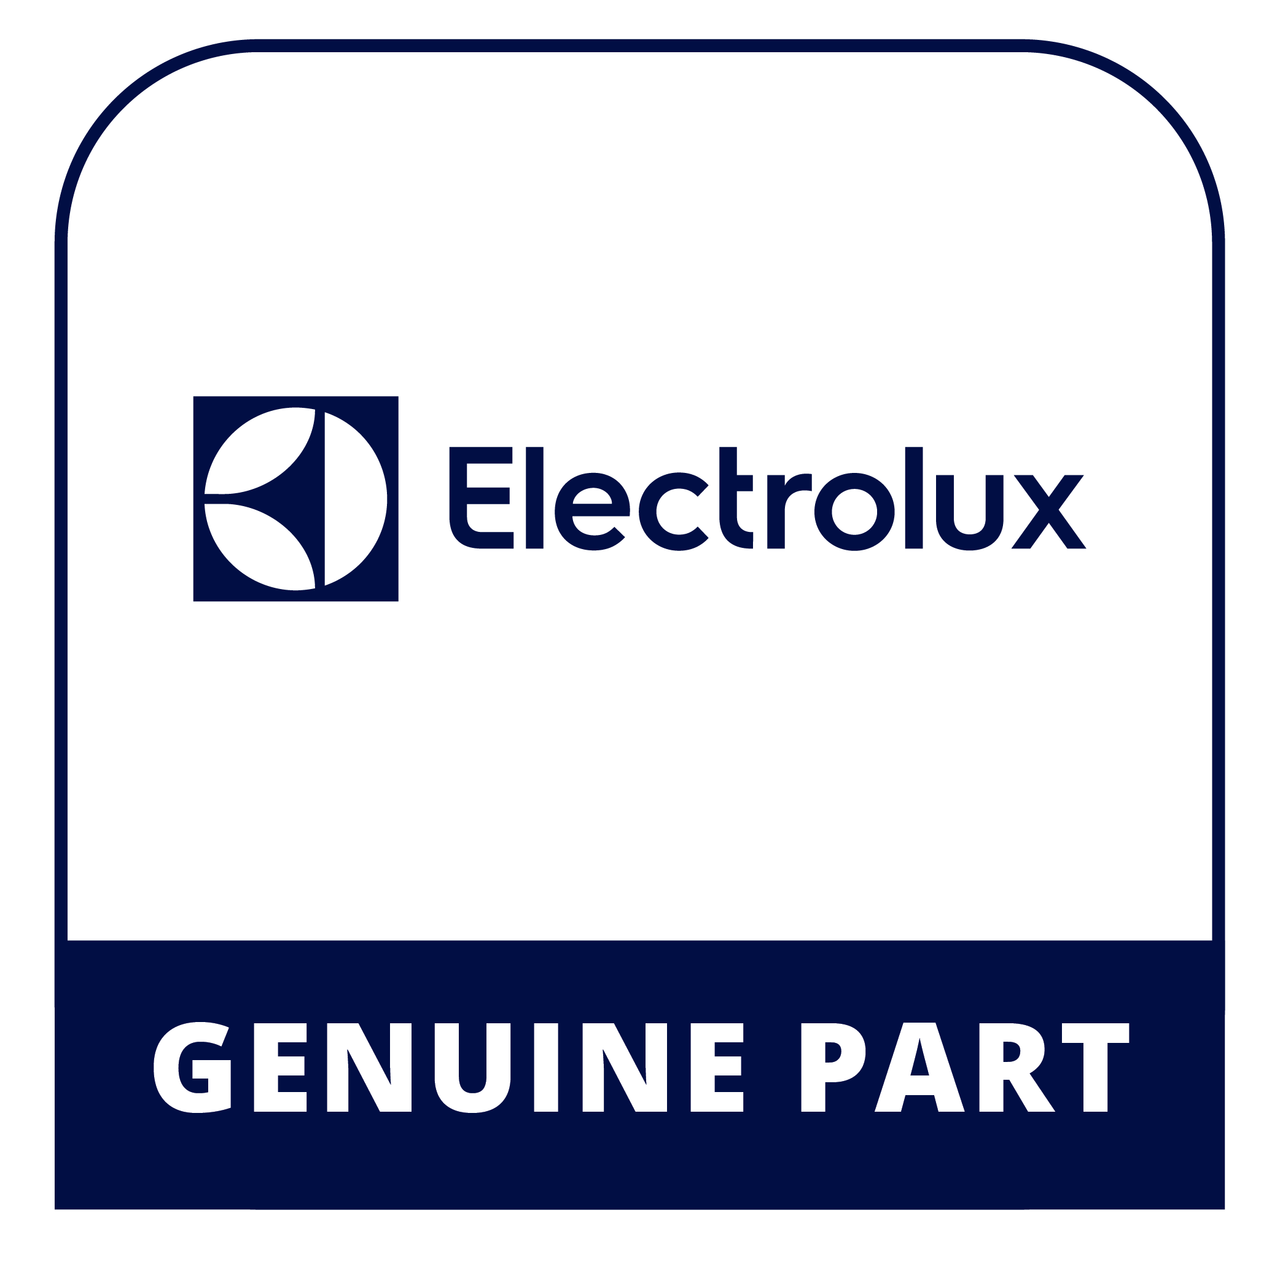 Frigidaire - Electrolux 5304499957 Motor - Genuine Electrolux Part